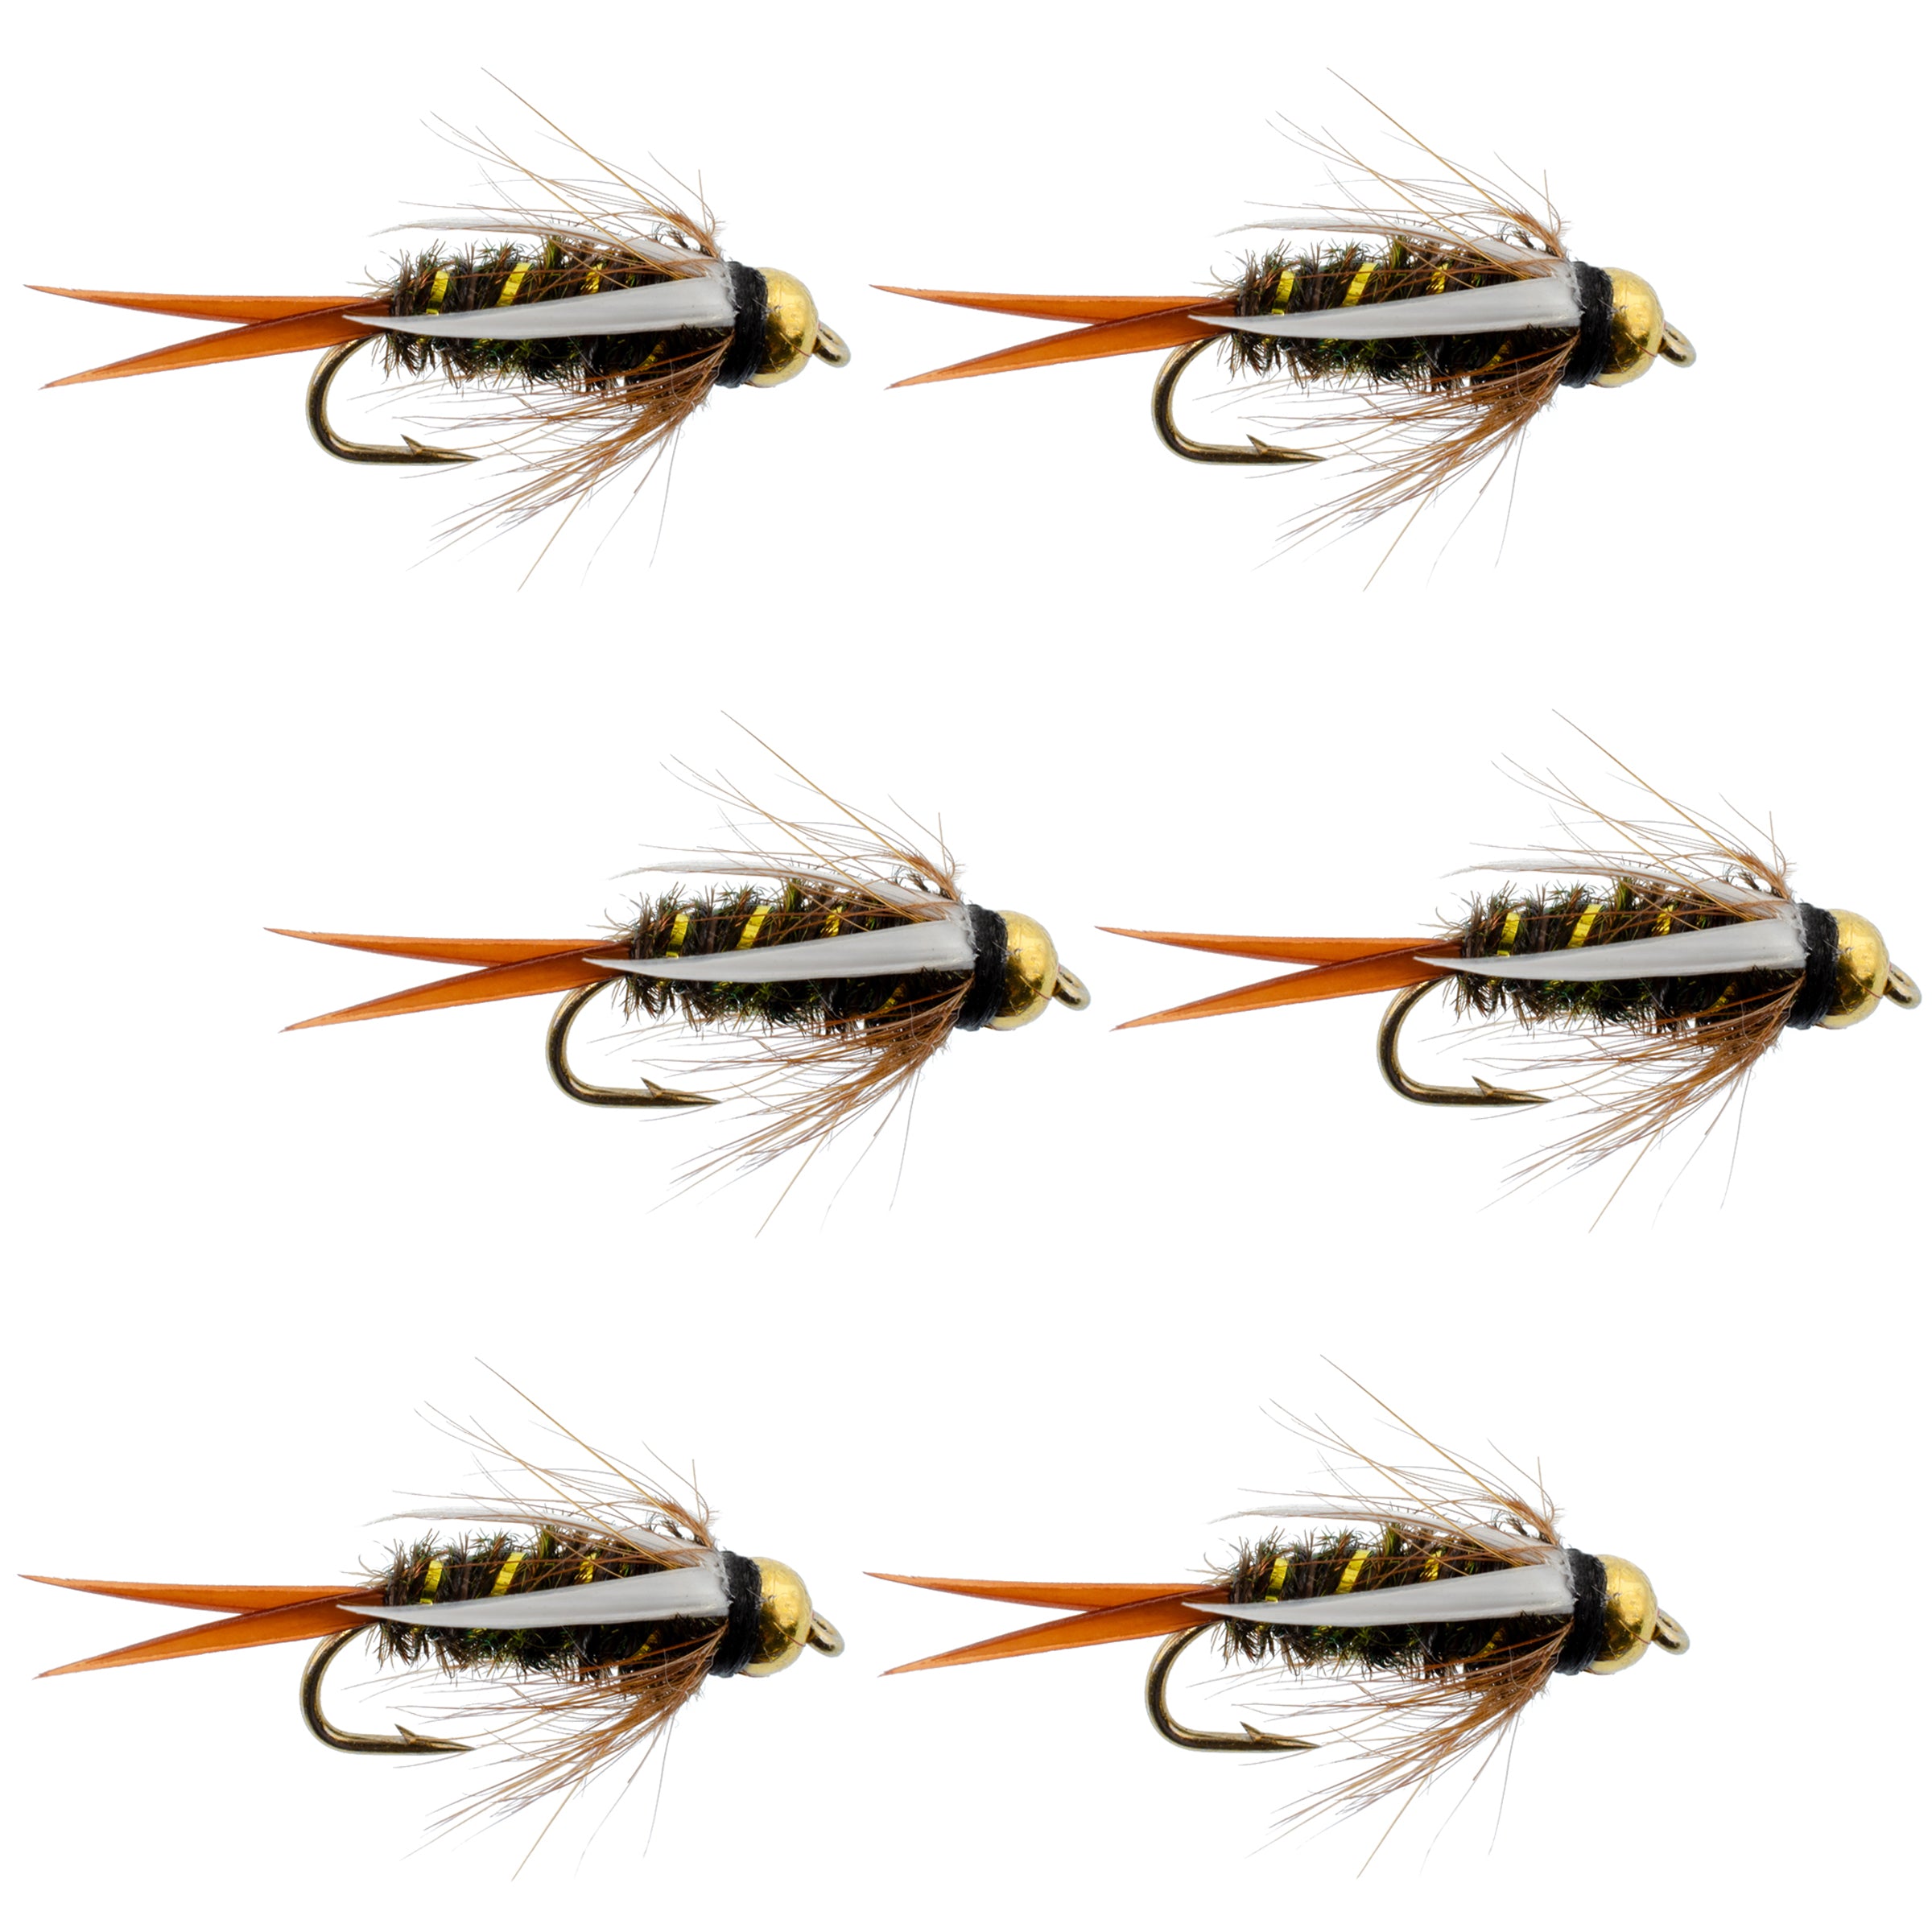 Bead Head Prince Nymph Fly Fishing Flies - Set of 6 Flies Hook Size 10